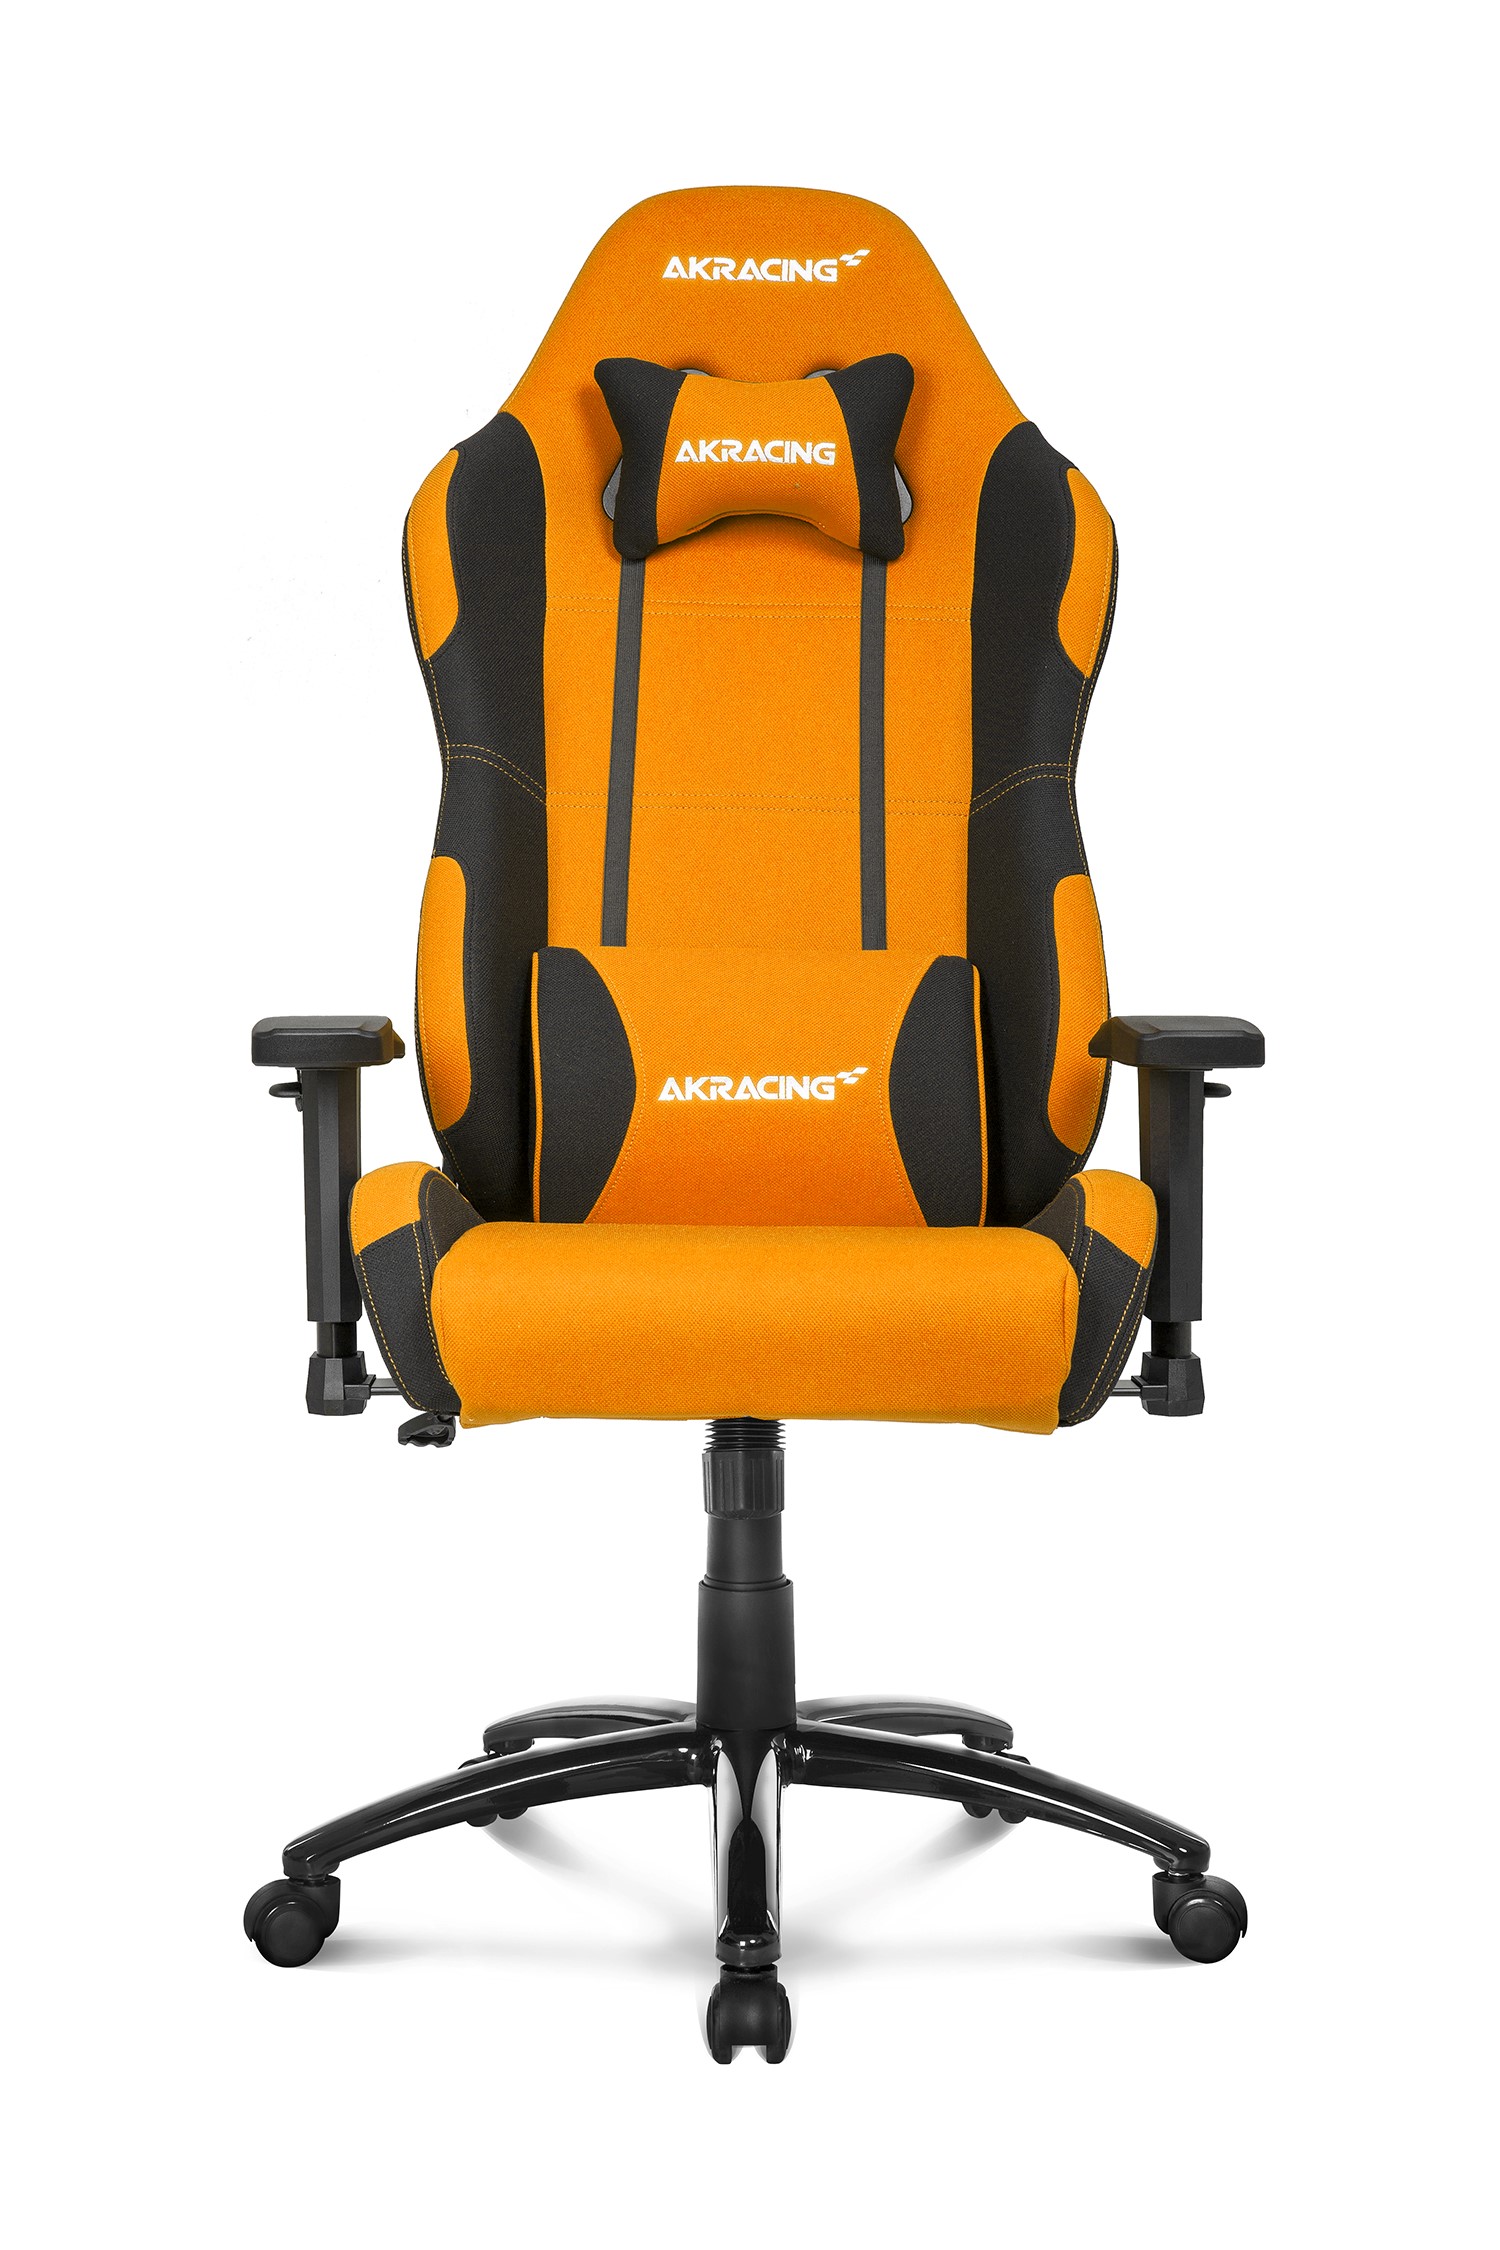 AKRacing Prime Orange Gaming Chair